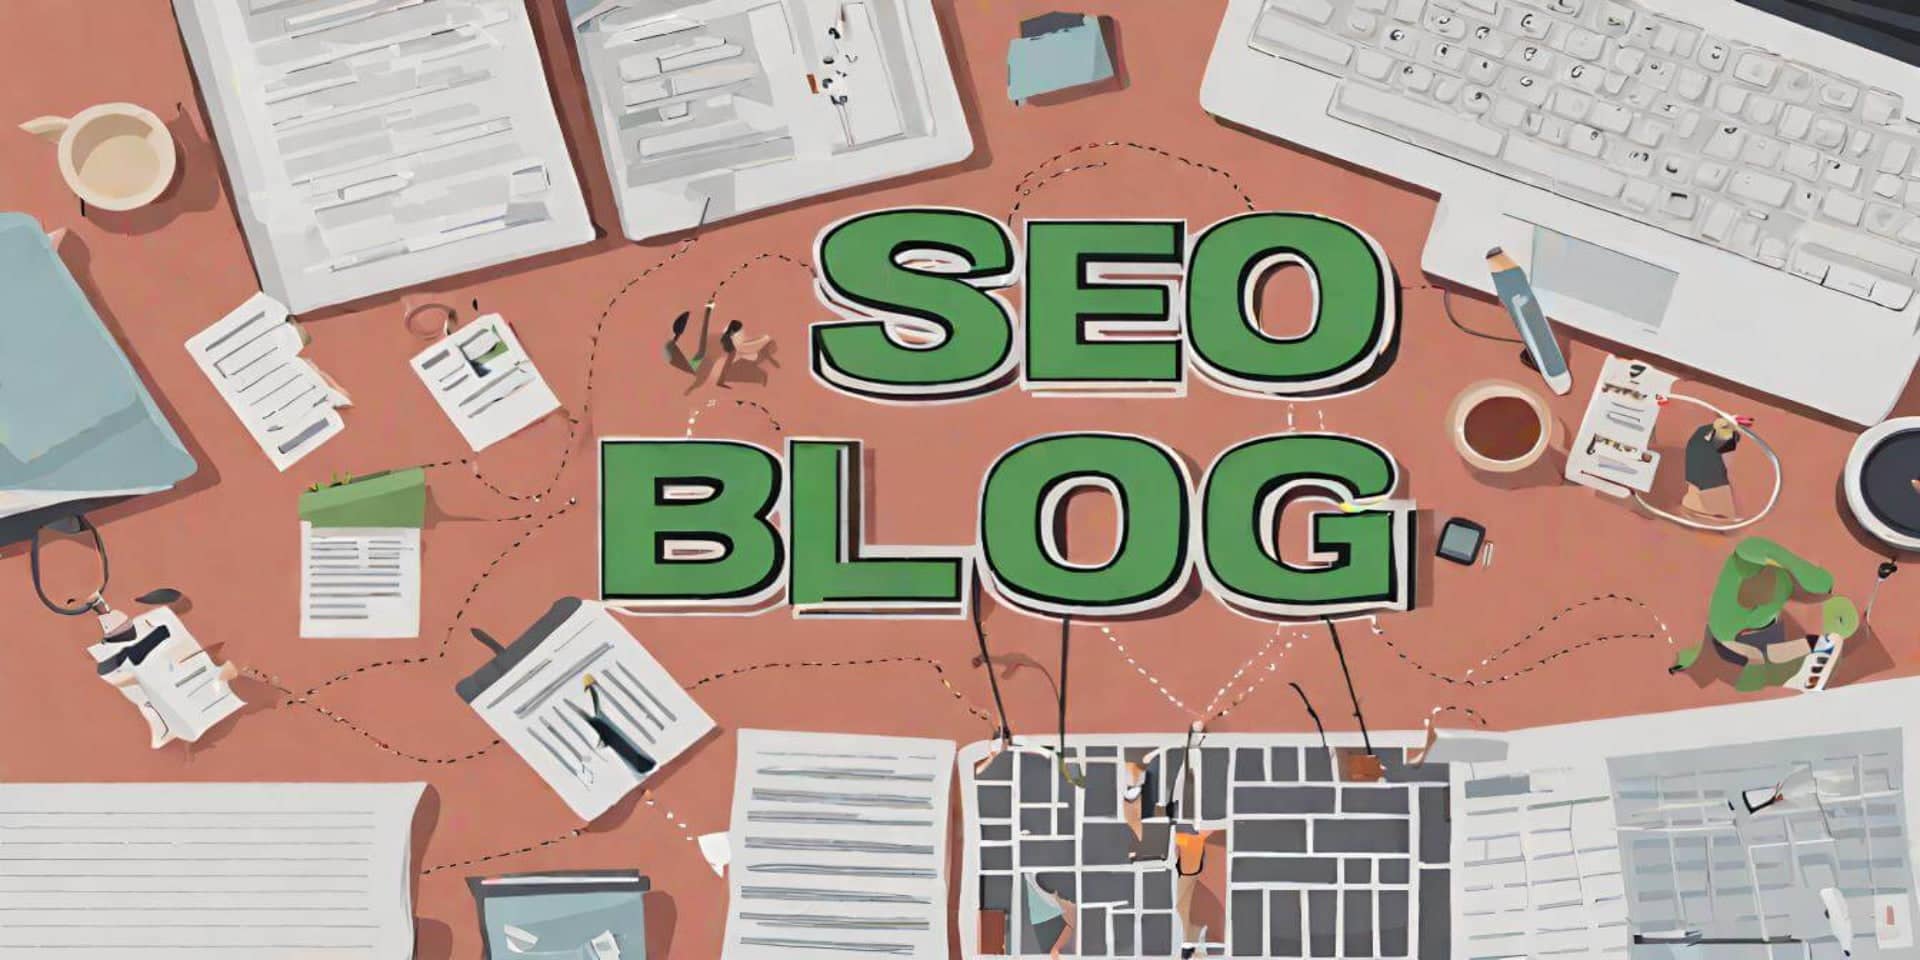 We will create SEO-Optimized Blog Posts